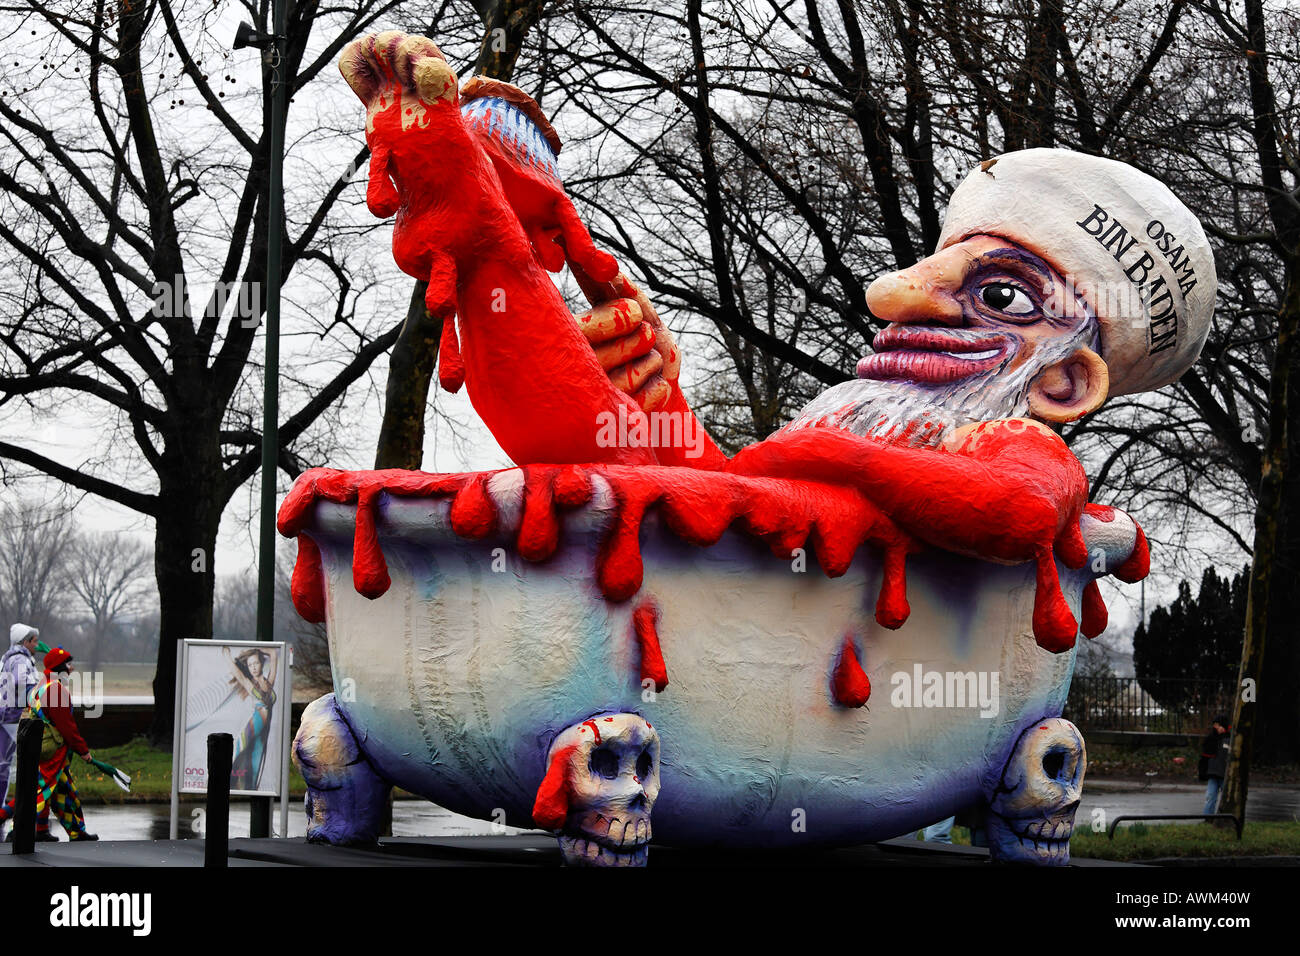 Political caricature, paper-maché Osama Bin Laden bathing in blood, Carnival (Mardi Gras) parade in Duesseldorf, North Rhine-We Stock Photo